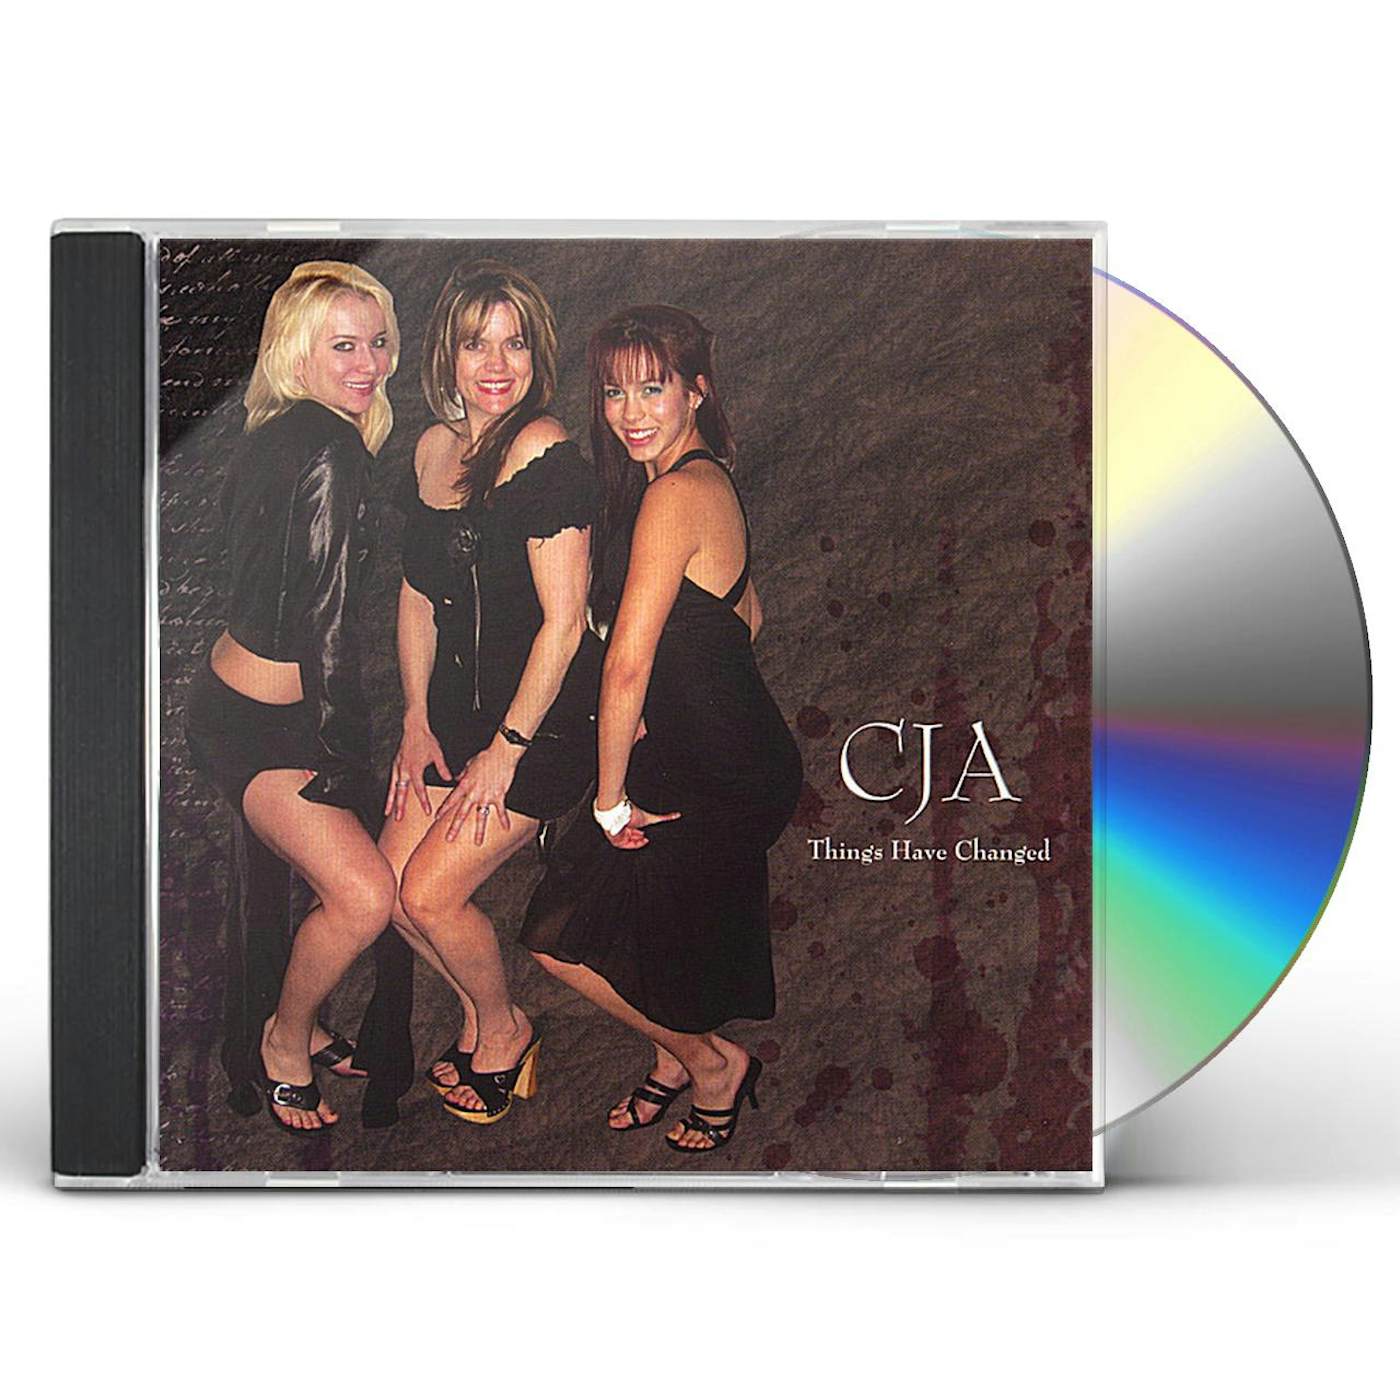 CJA THINGS HAVE CHANGED CD